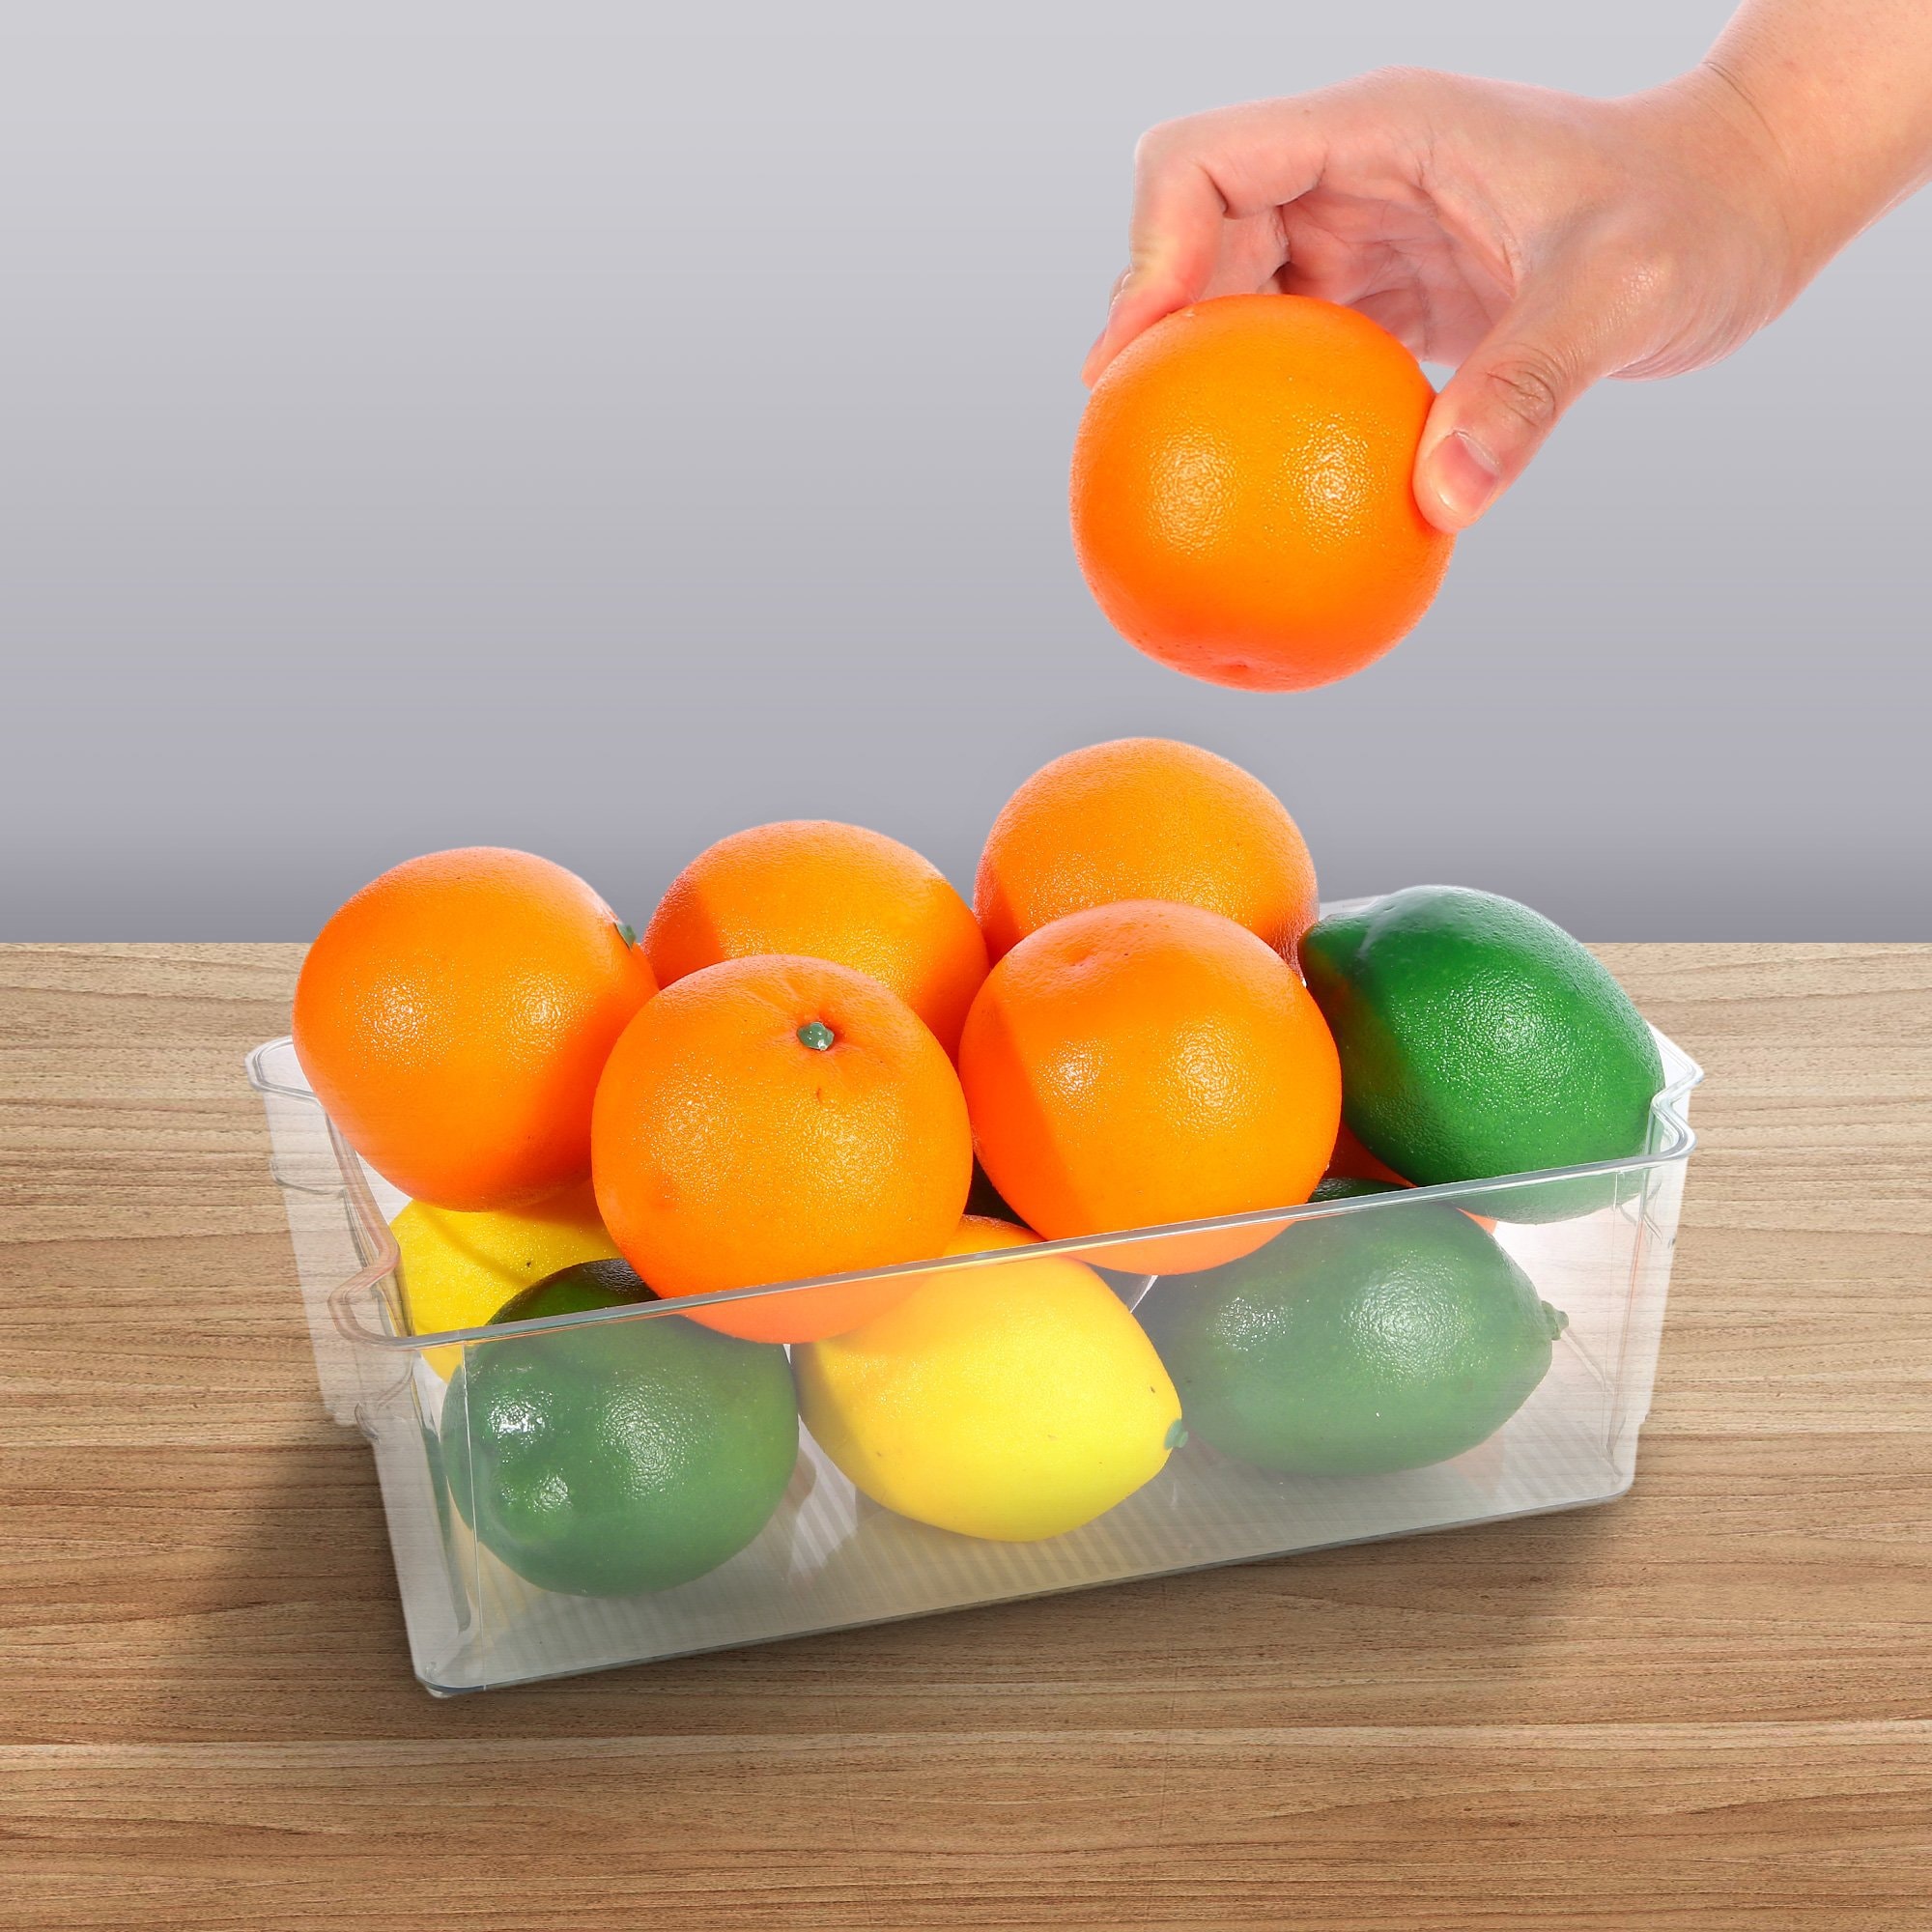 ROSELIFE 飲料蔬果分類廚房冰箱收納盒 11.8"x6.3"x3.5"